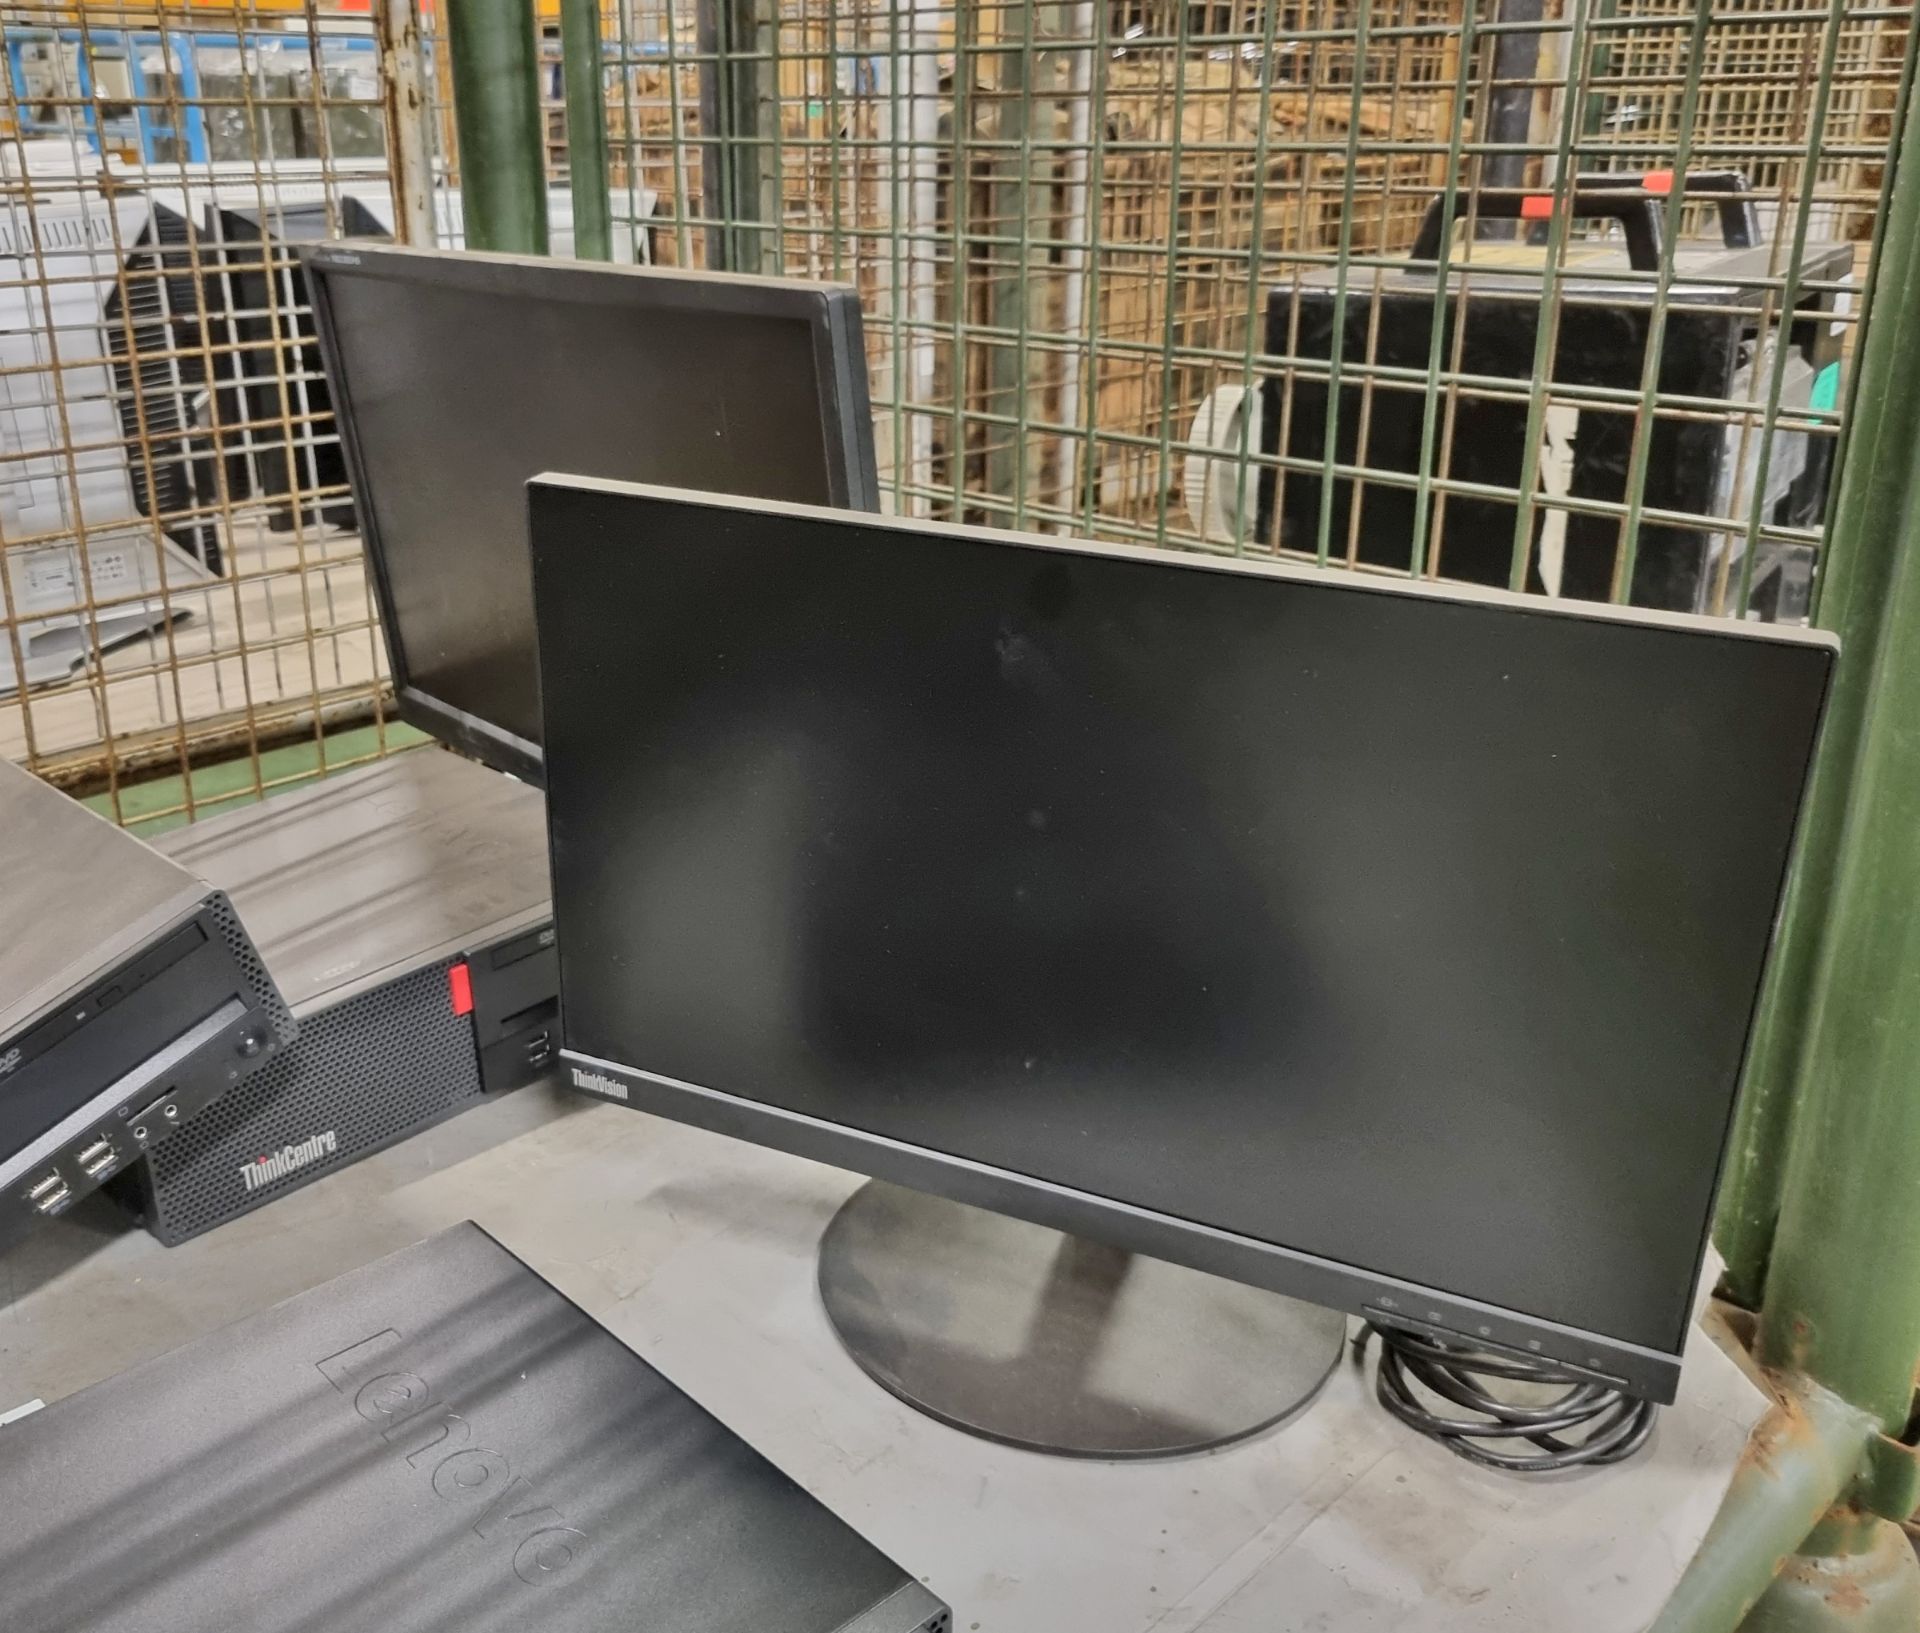 4x Lenovo Thinkcentre Computer base stations & Monitors - Image 3 of 5